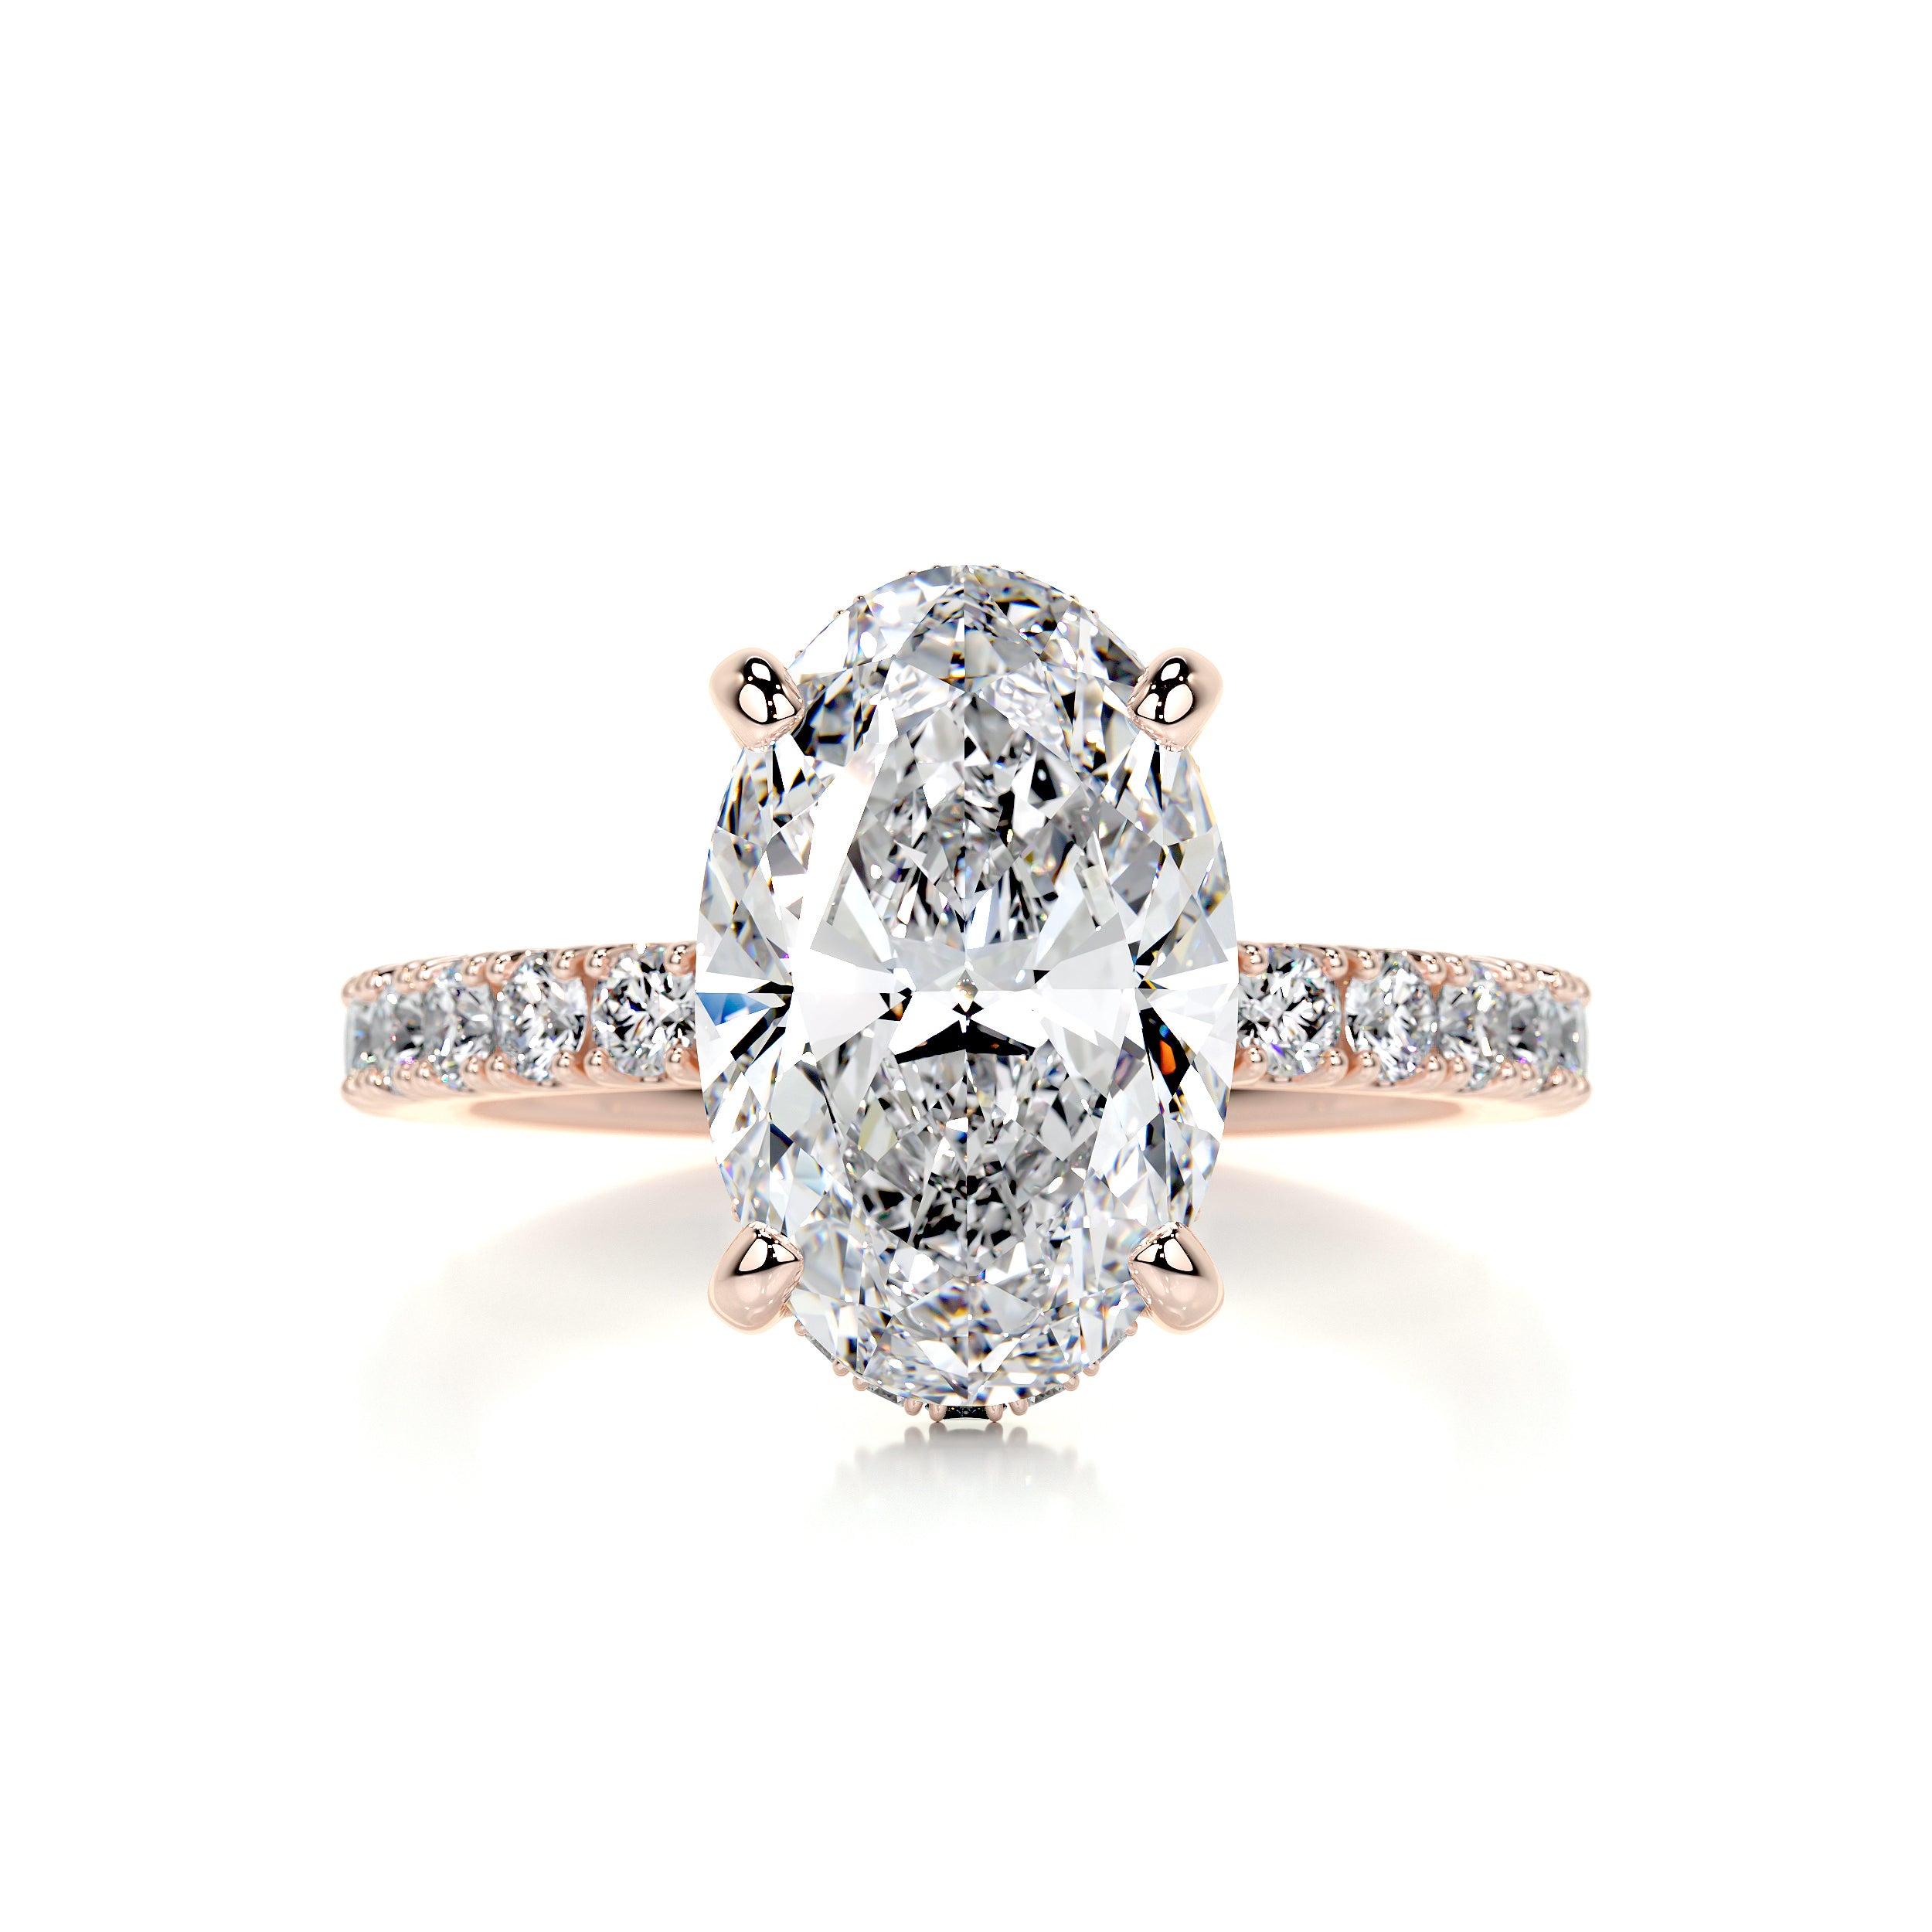 Lucy Diamond Engagement Ring   (3.5 Carat) -14K Rose Gold